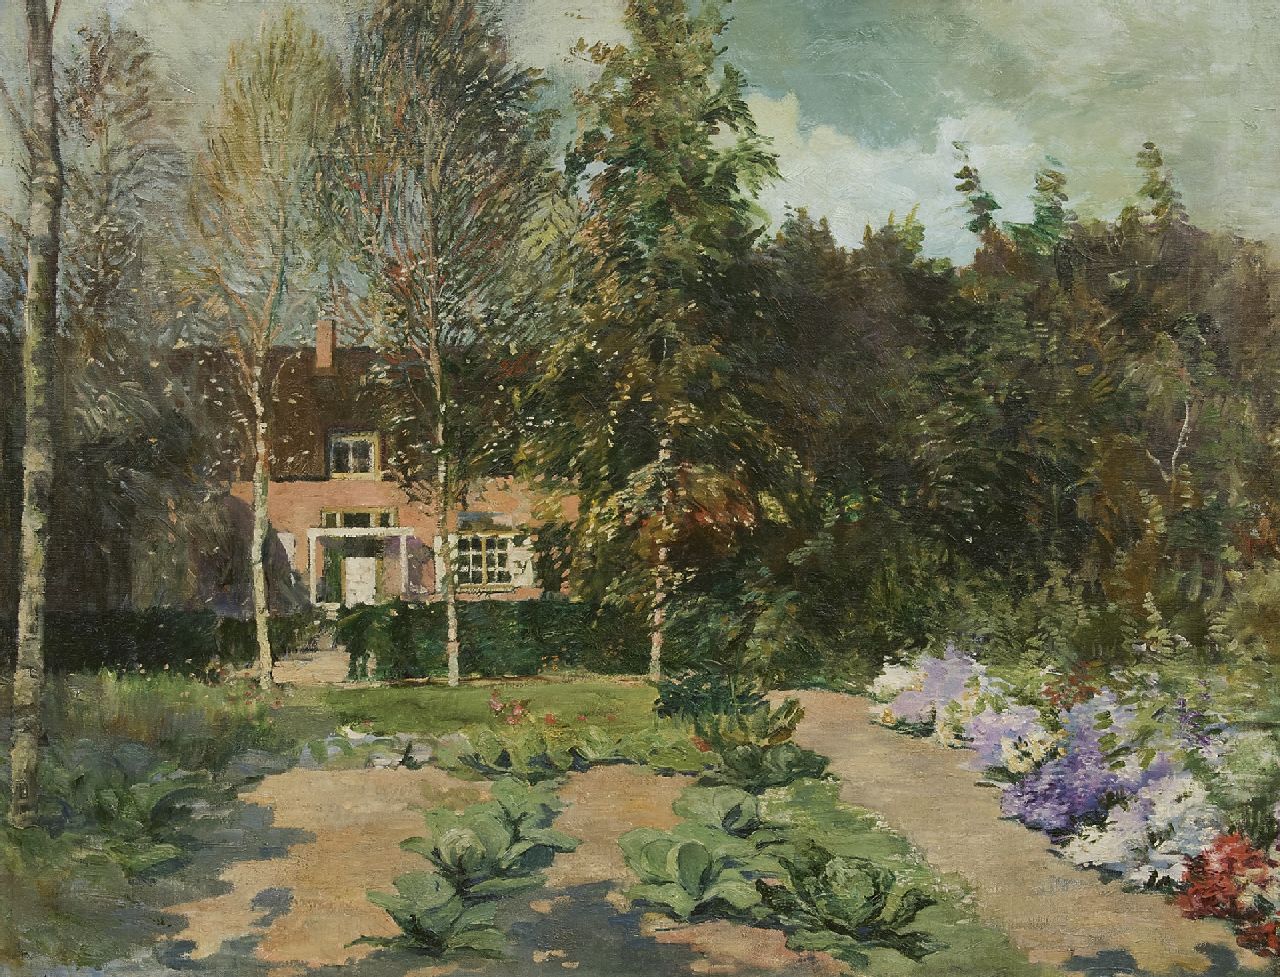 Schagen G.F. van | Gerbrand Frederik van Schagen, A country house in summer, oil on canvas 65.3 x 85.7 cm